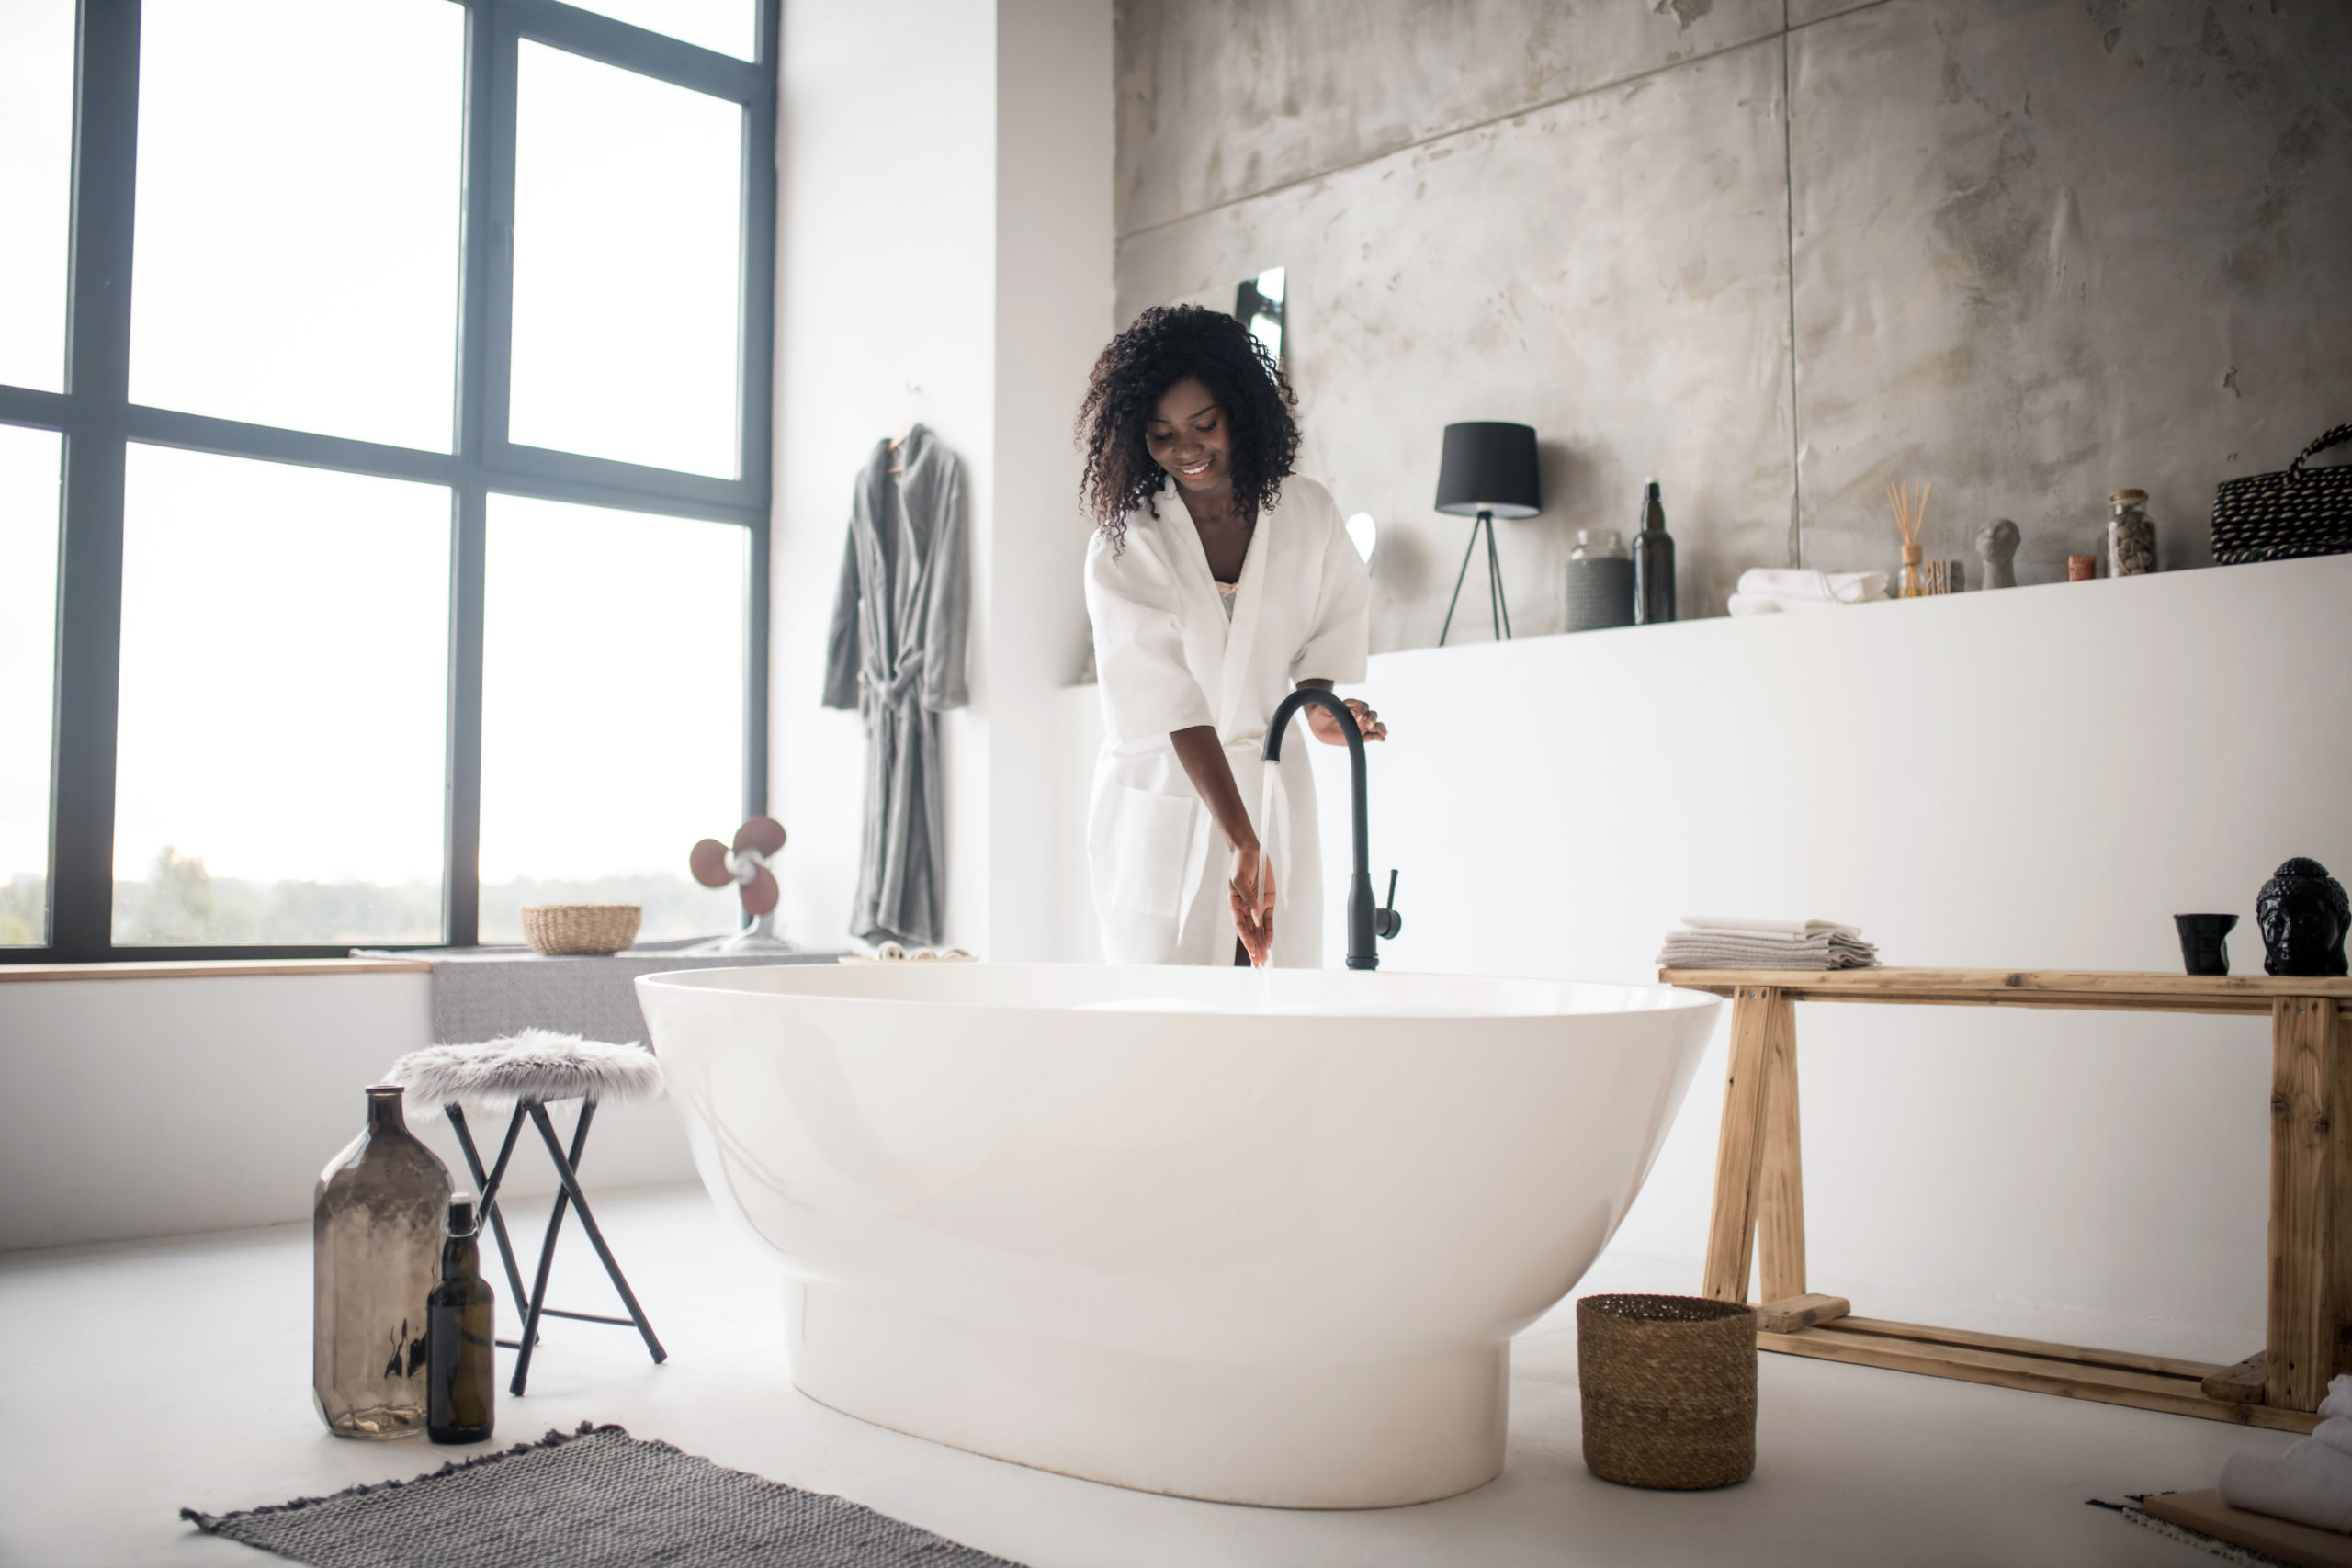 Home Bathroom Interior Design by MDfx smart shower app home intelligent bathrooms design